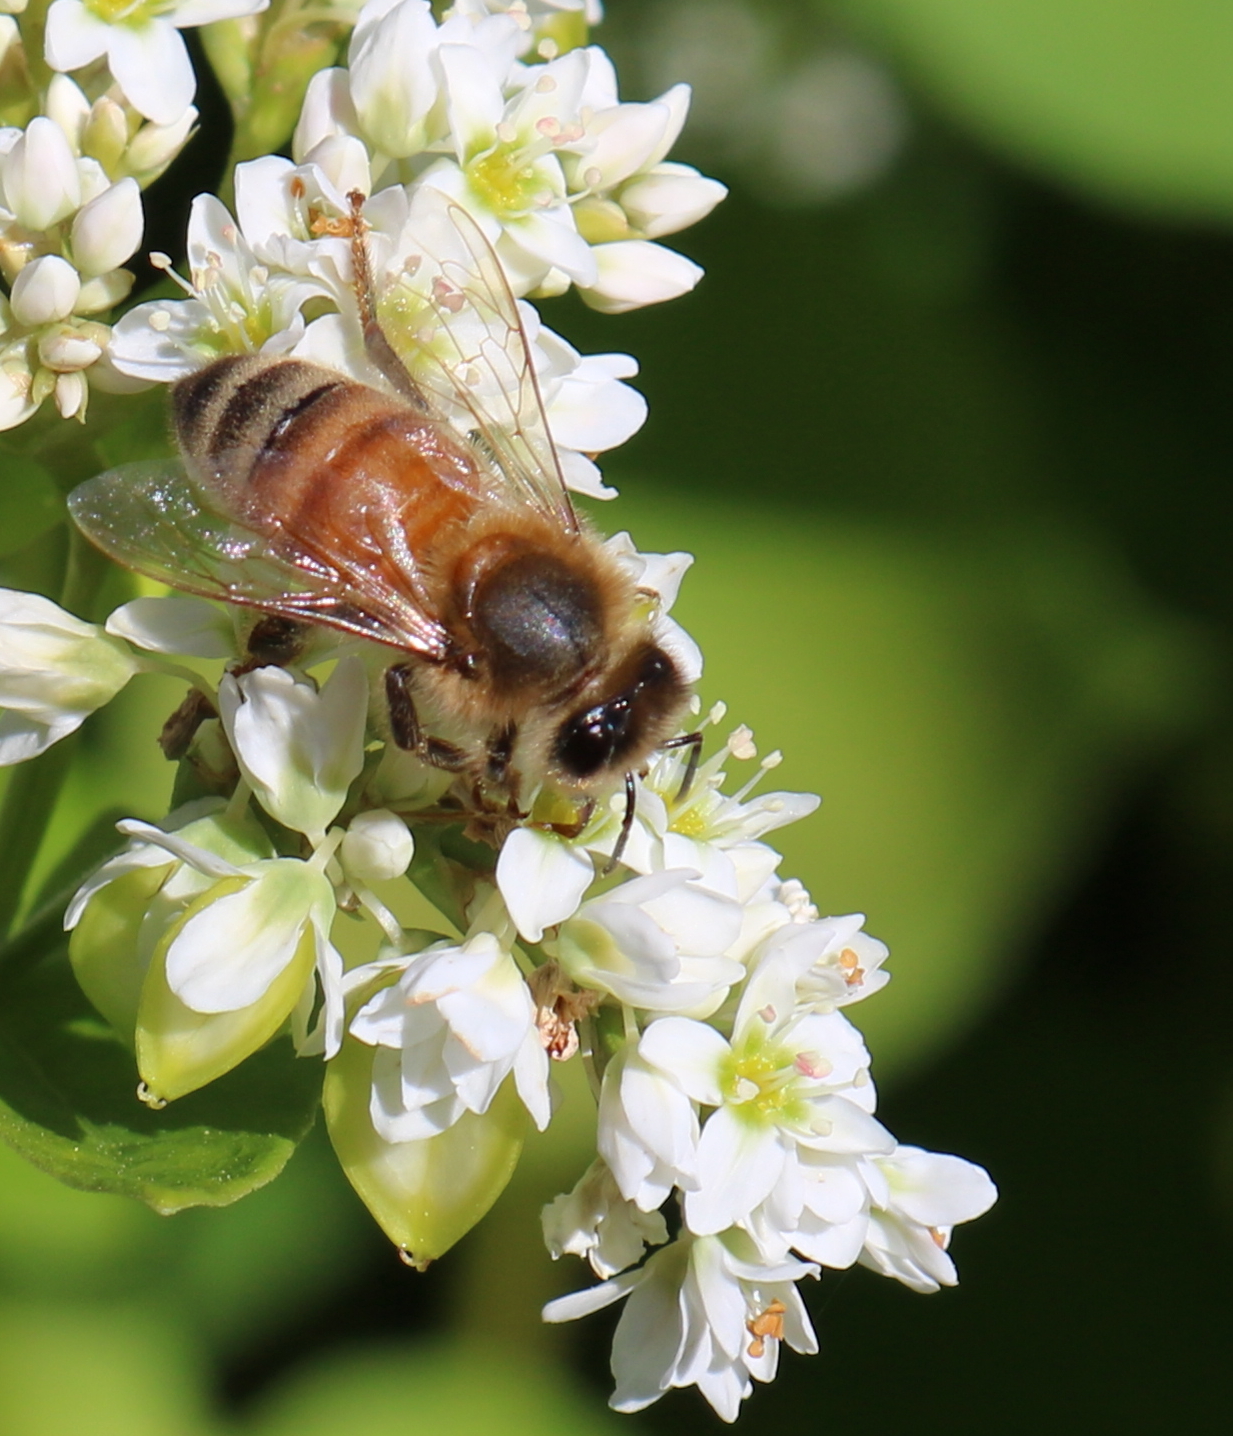 Bees in the Buckwheat